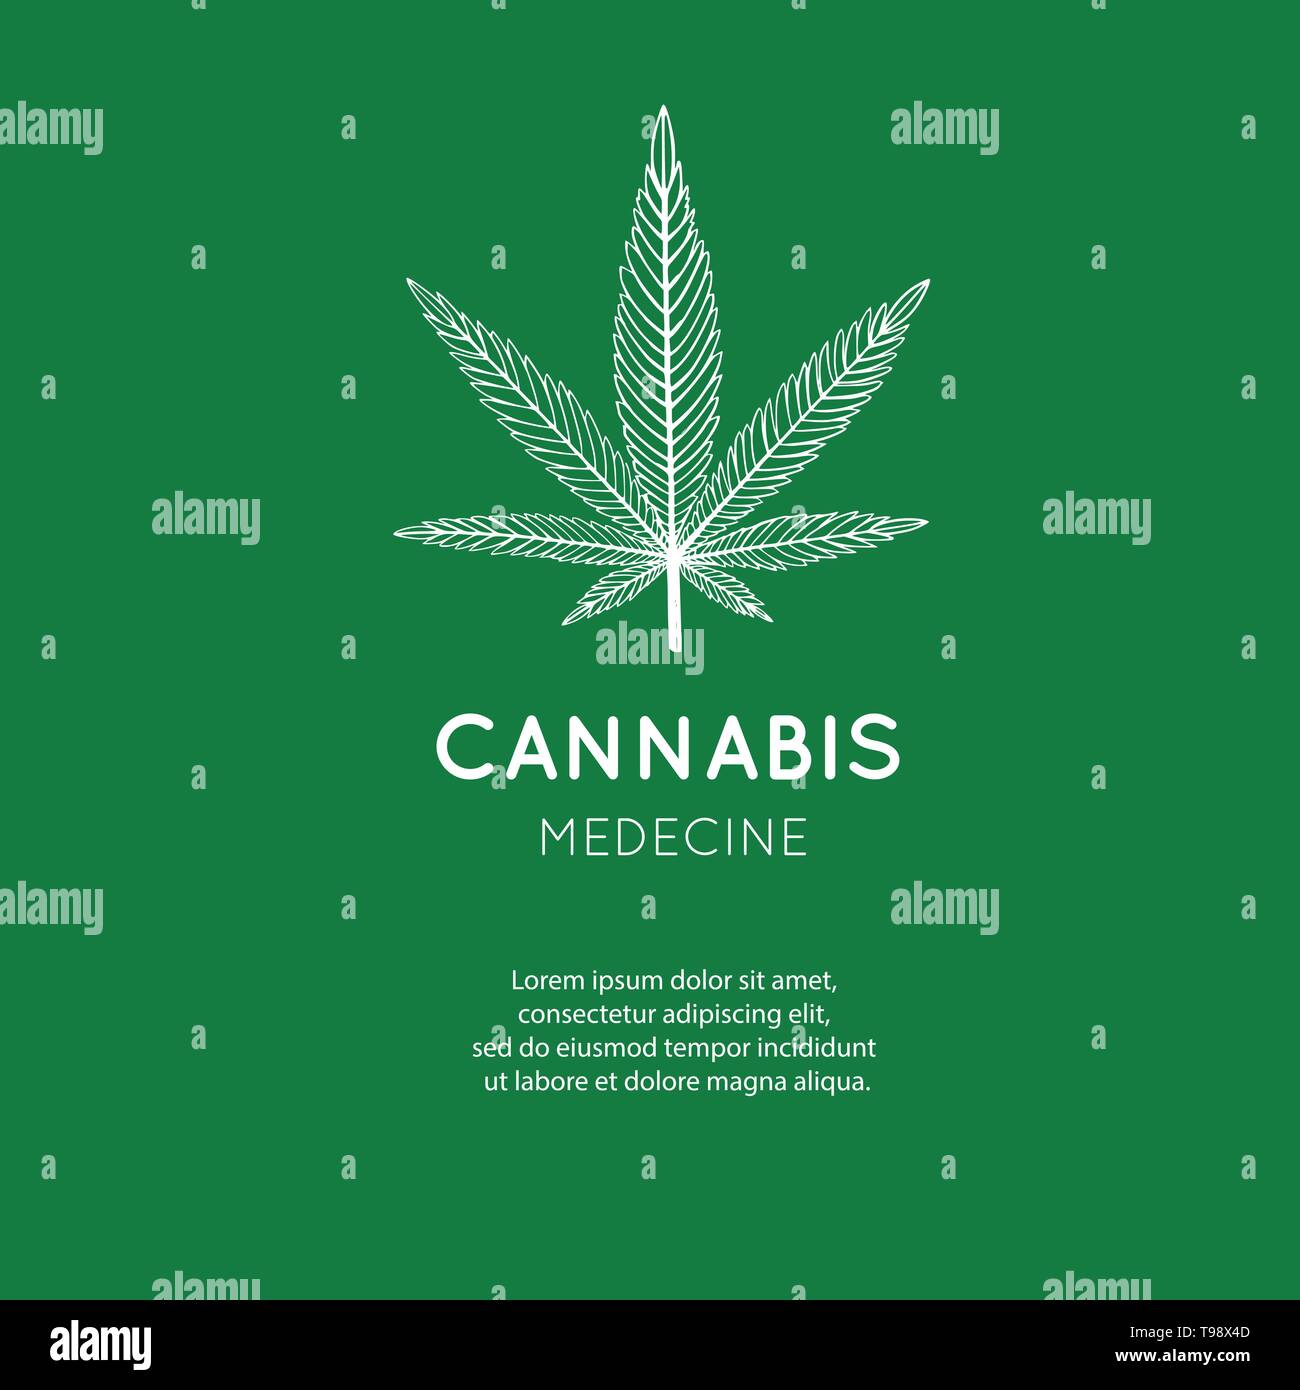 420 cannabis banner vector design illustration with marijuana leaf